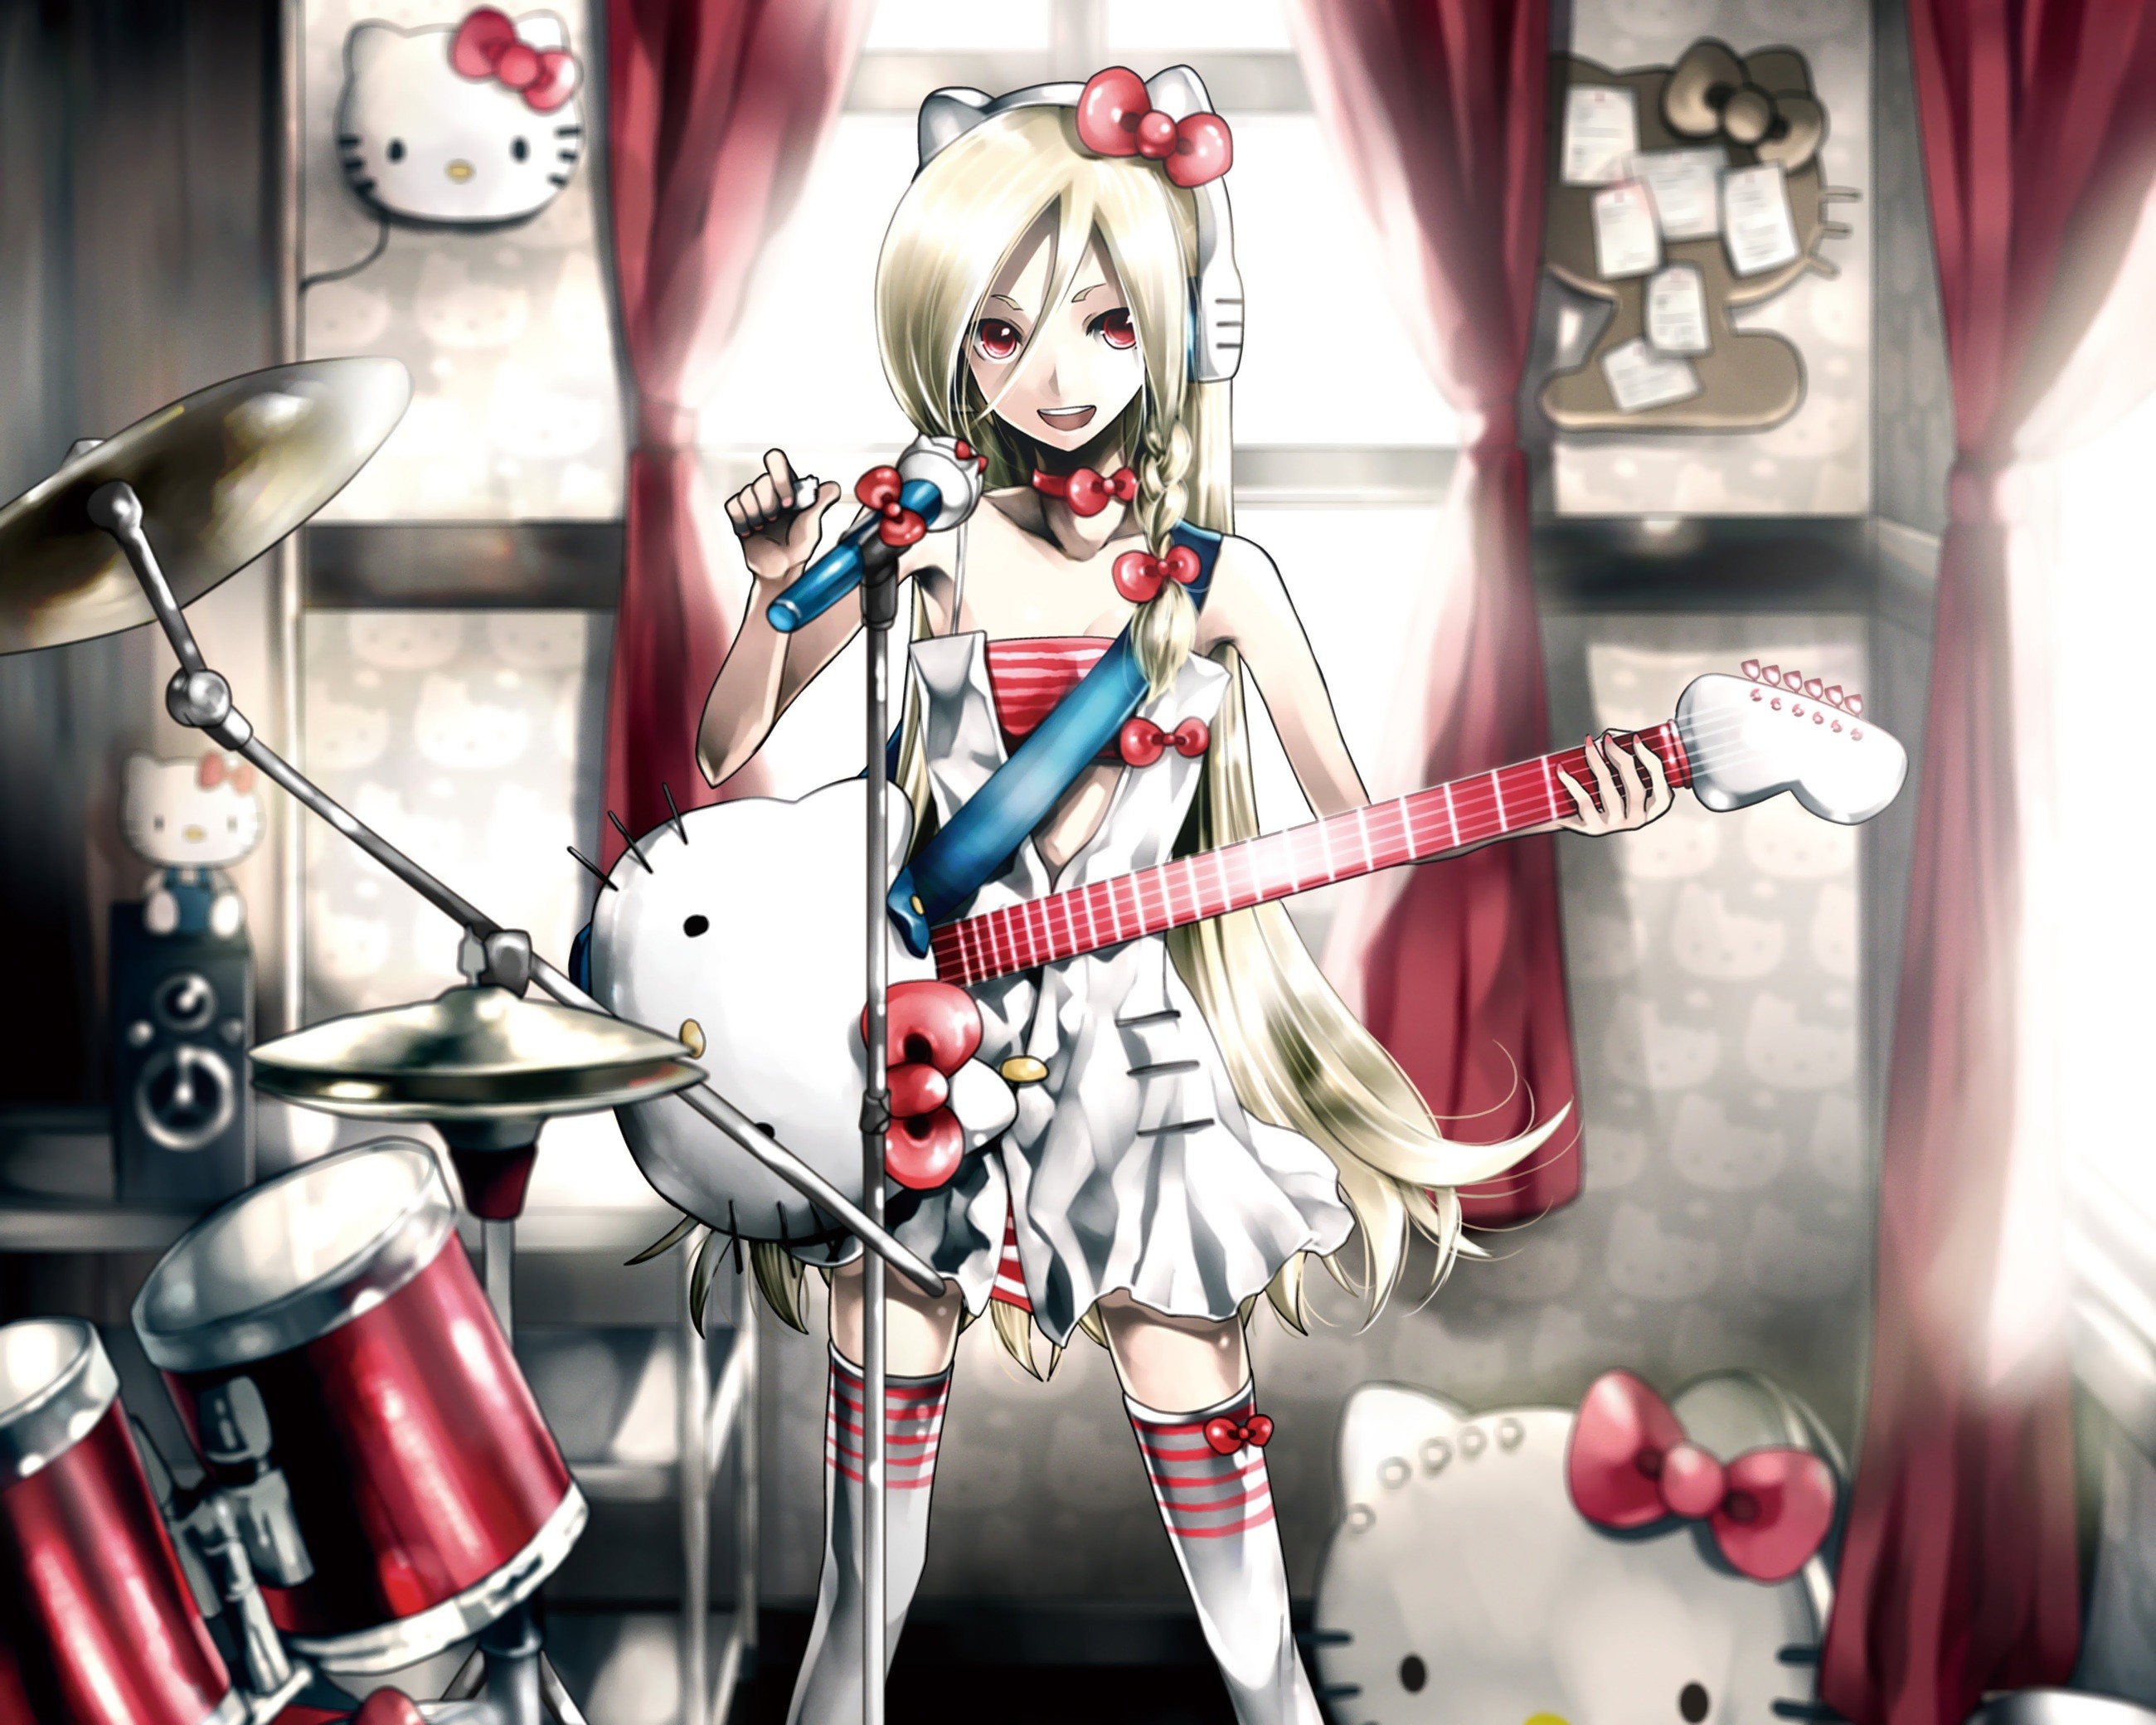 Anime Anime Girls Hello Kitty Drums Guitar Microphone Blonde Long Hair Bangs Braided Hair Pink Eyes  2600x2080